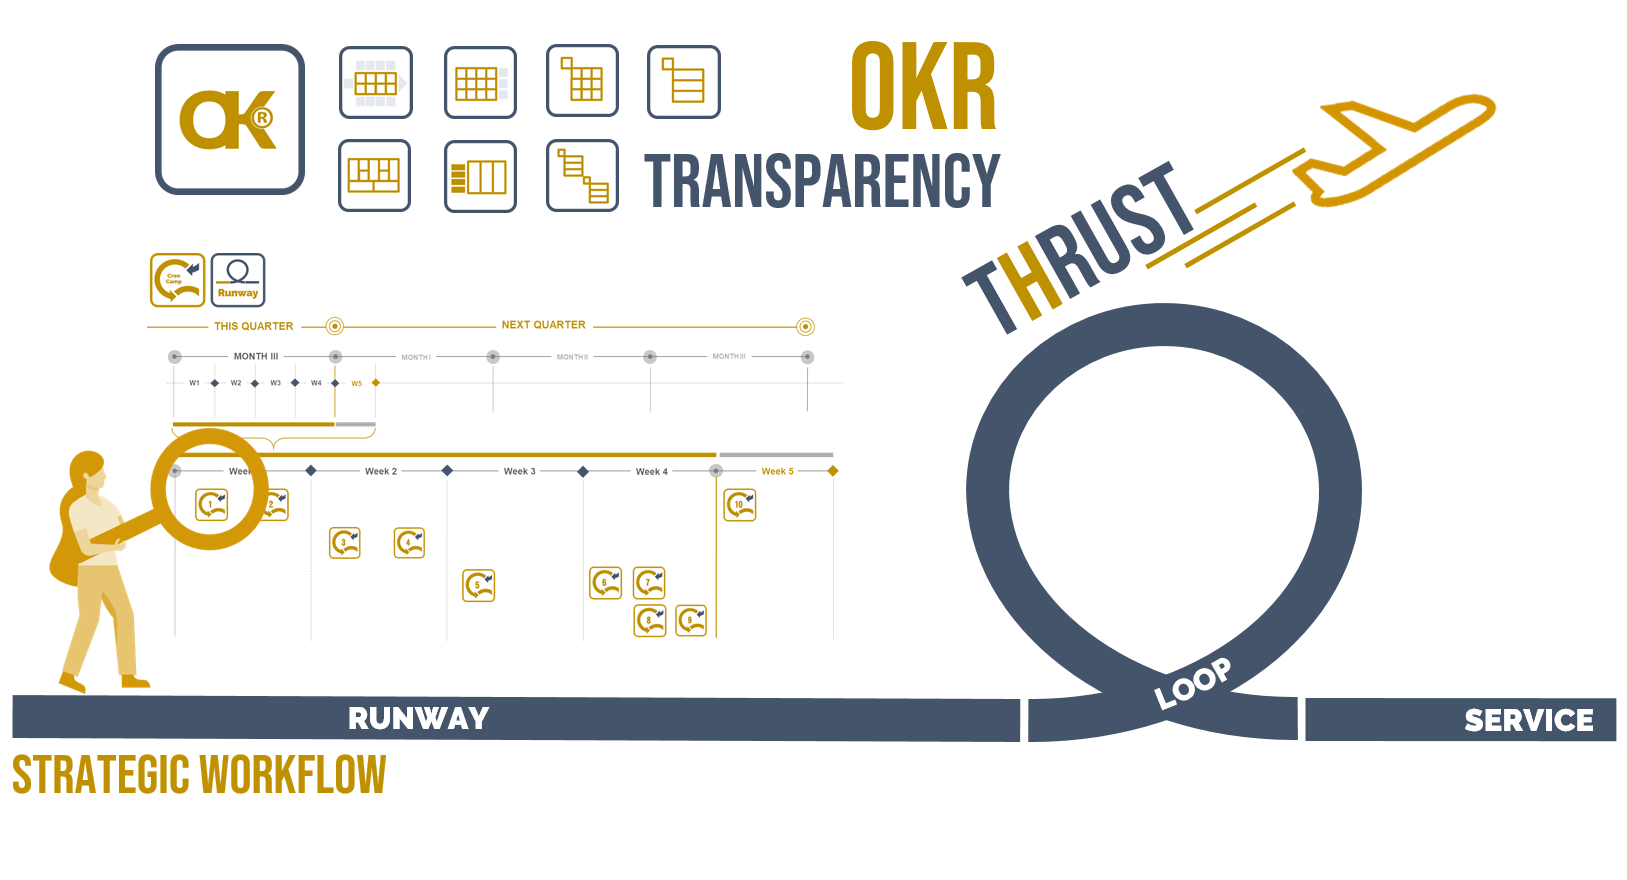 OKR Transparency